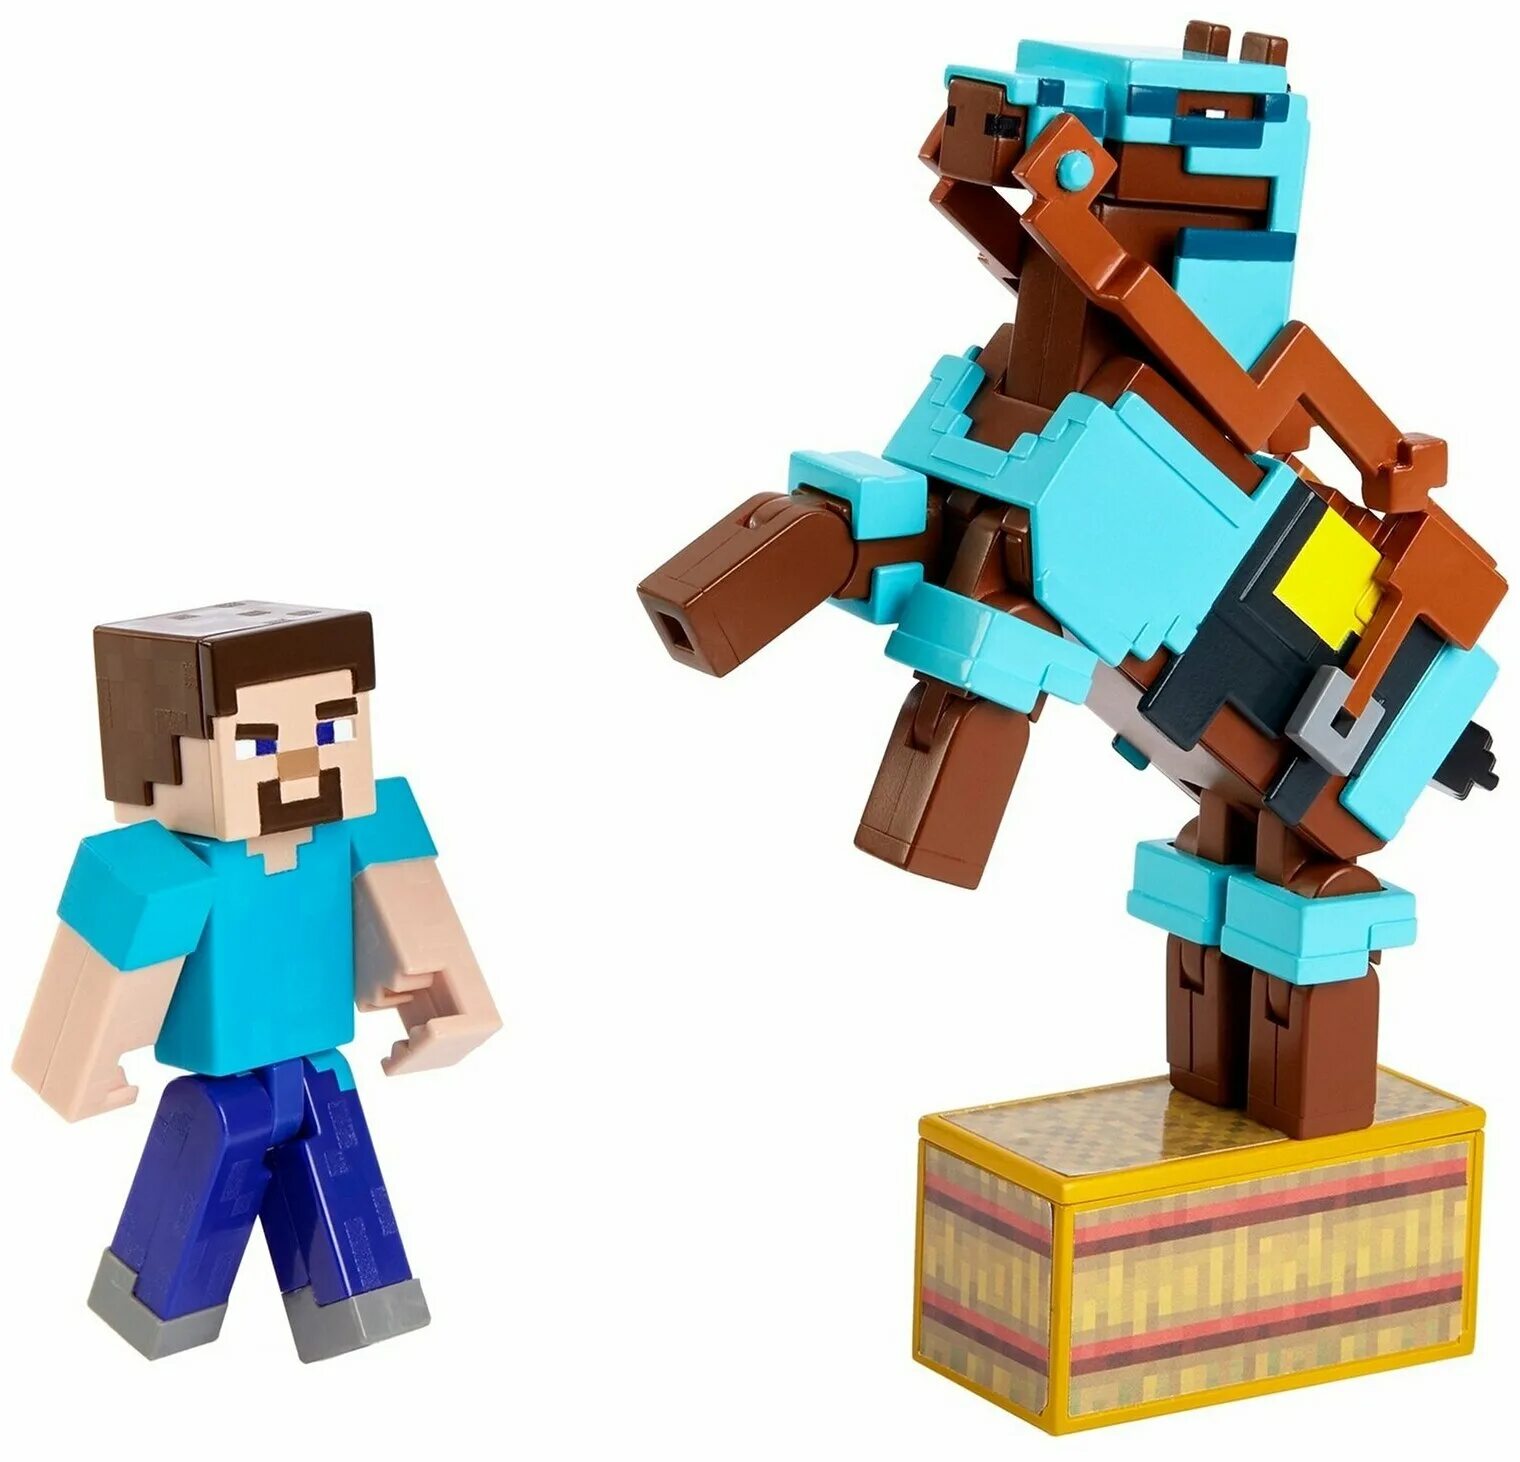 Нубик игрушка. Набор фигурок Minecraft Стив и лошадь в броне glc78. Майнкрафт набор Стив и конь. Фигурки майнкрафт Mattel gcp33. Легомайгкрафтсьтиф вбране.